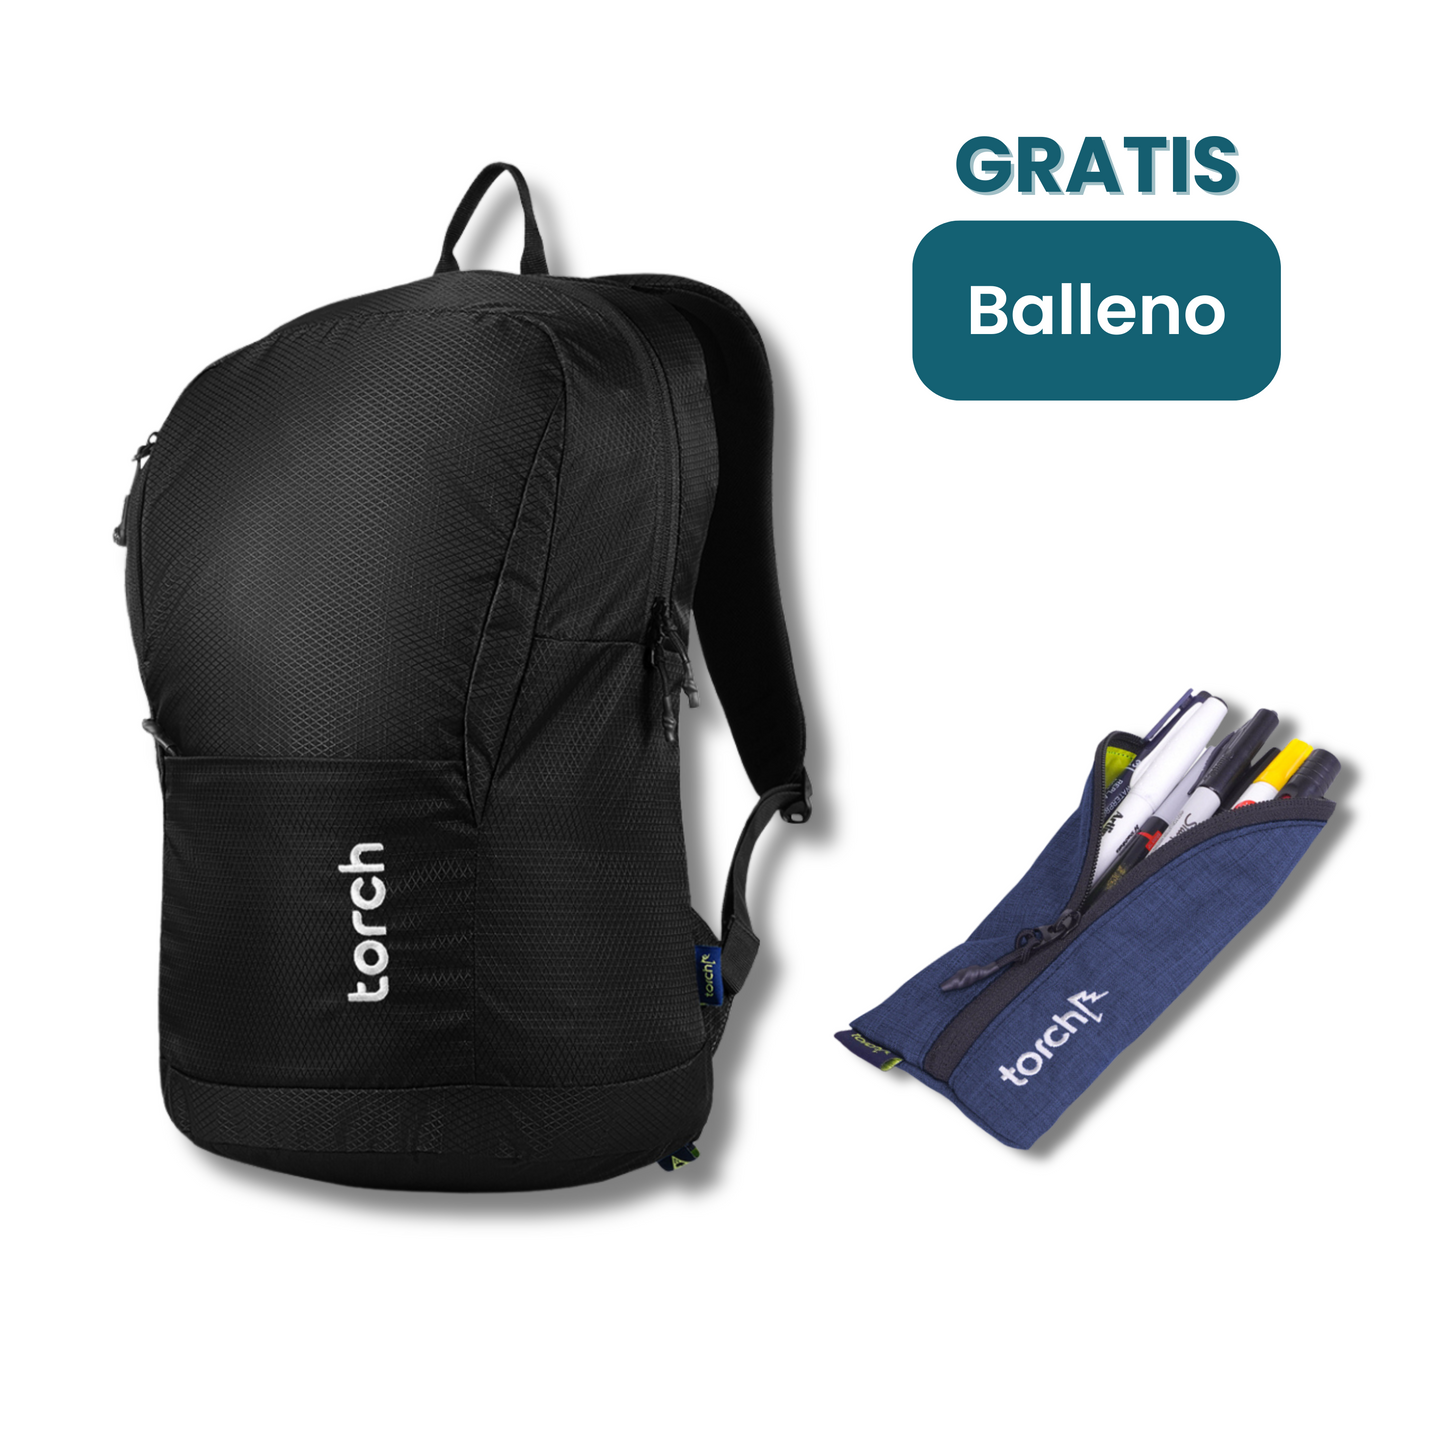 Paket Gratis - Kredo Daypack Free Balleno Stationery